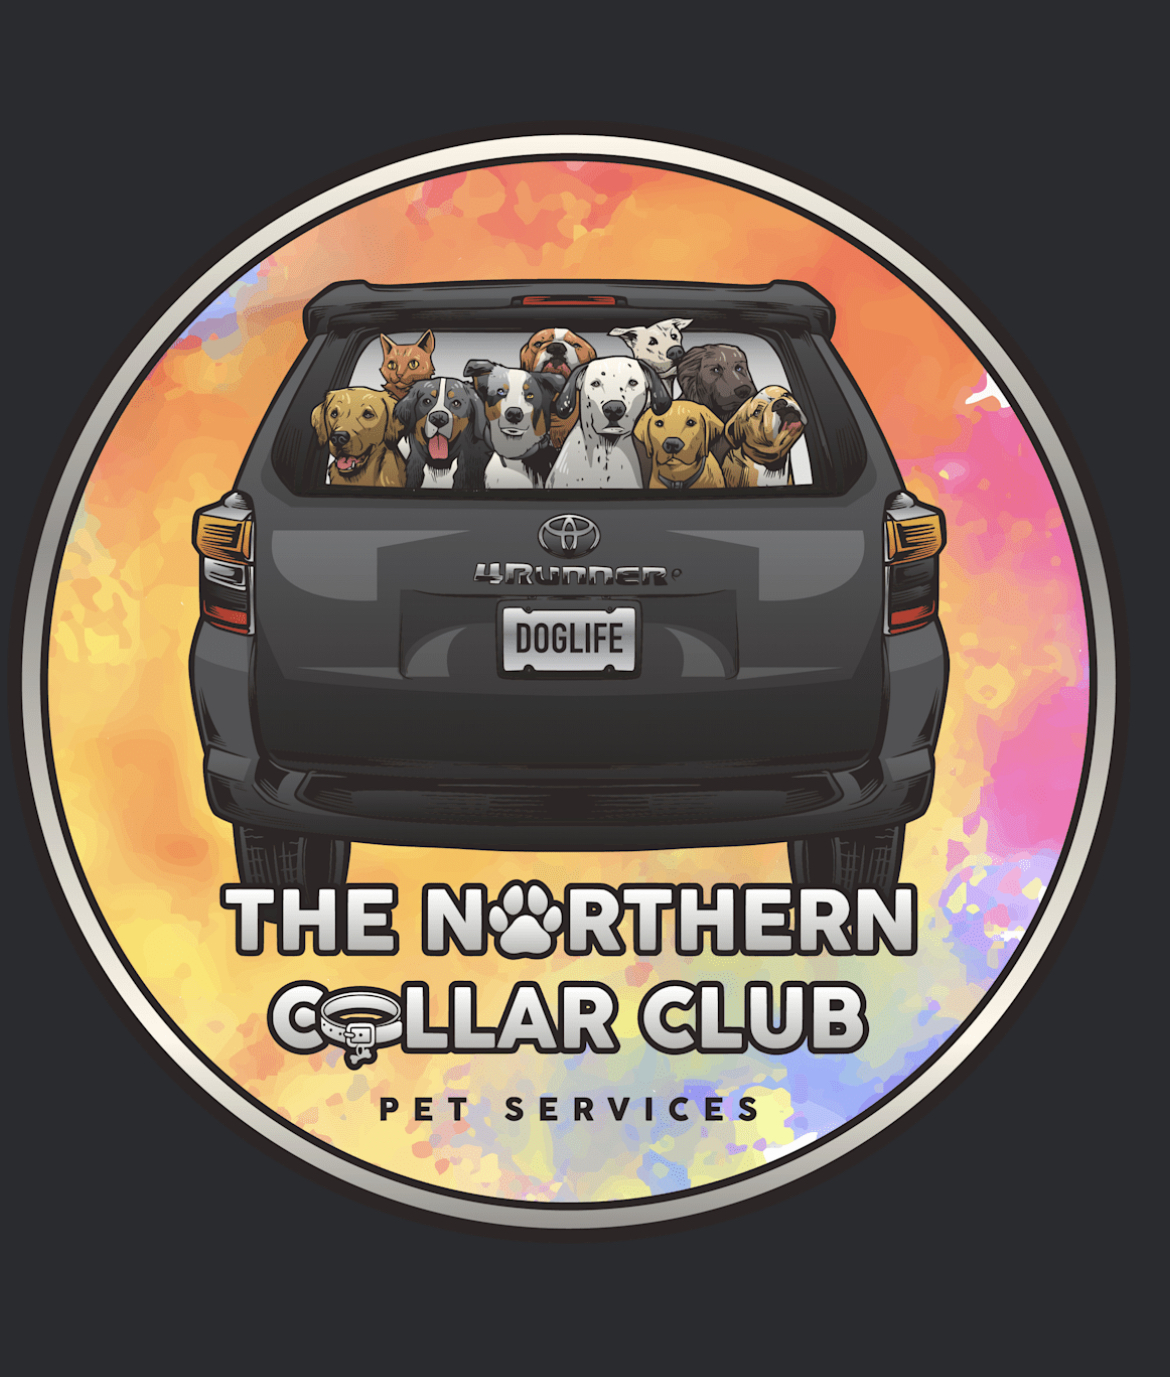 The Northern Collar Club